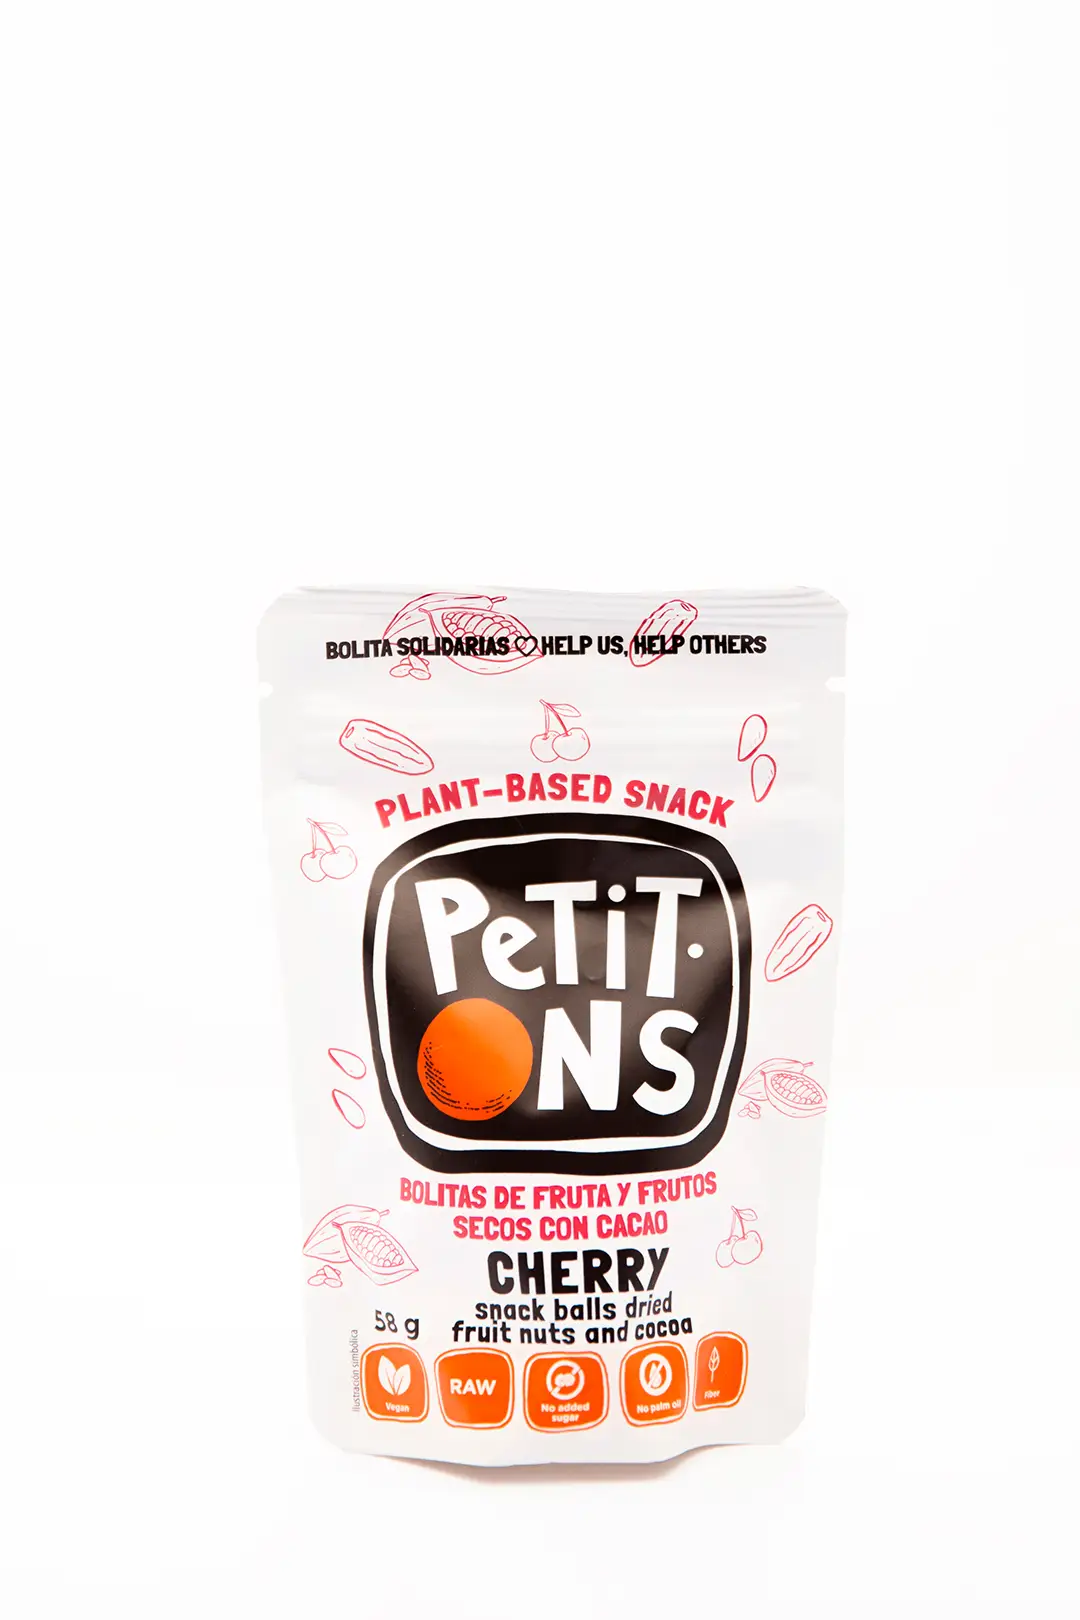 Petit-ons cherry